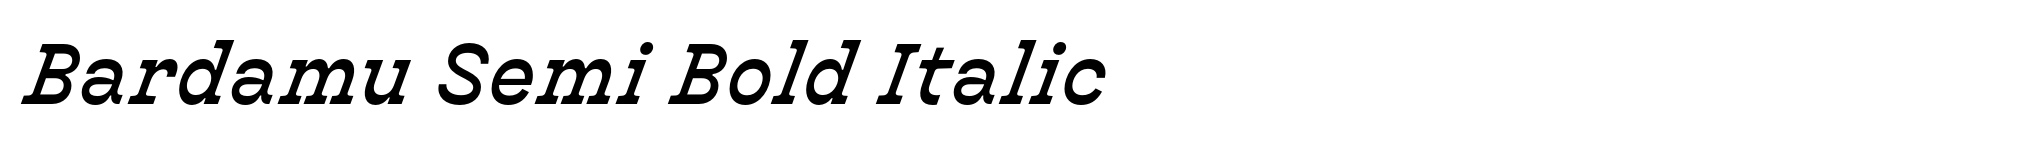 Bardamu Semi Bold Italic image